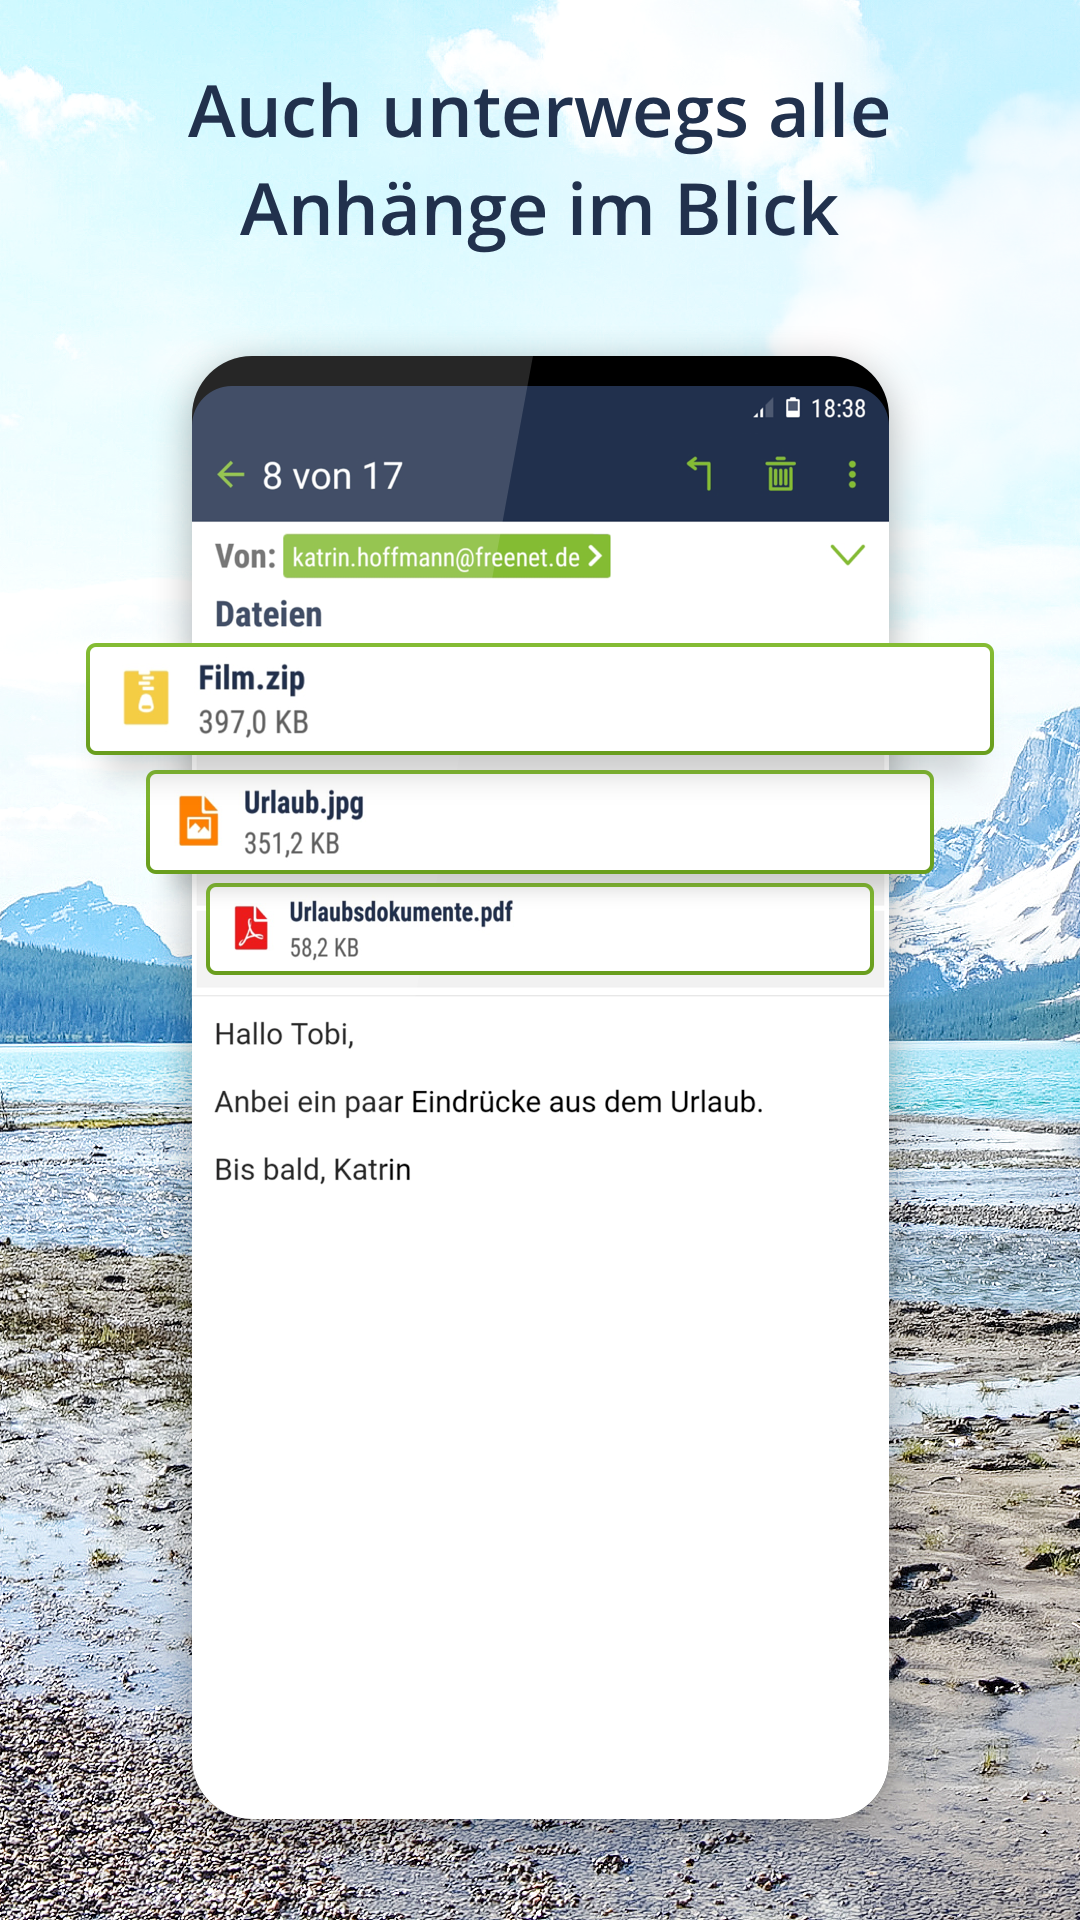 Android application freenet Mail - E-Mail Postfach und Kontakte screenshort